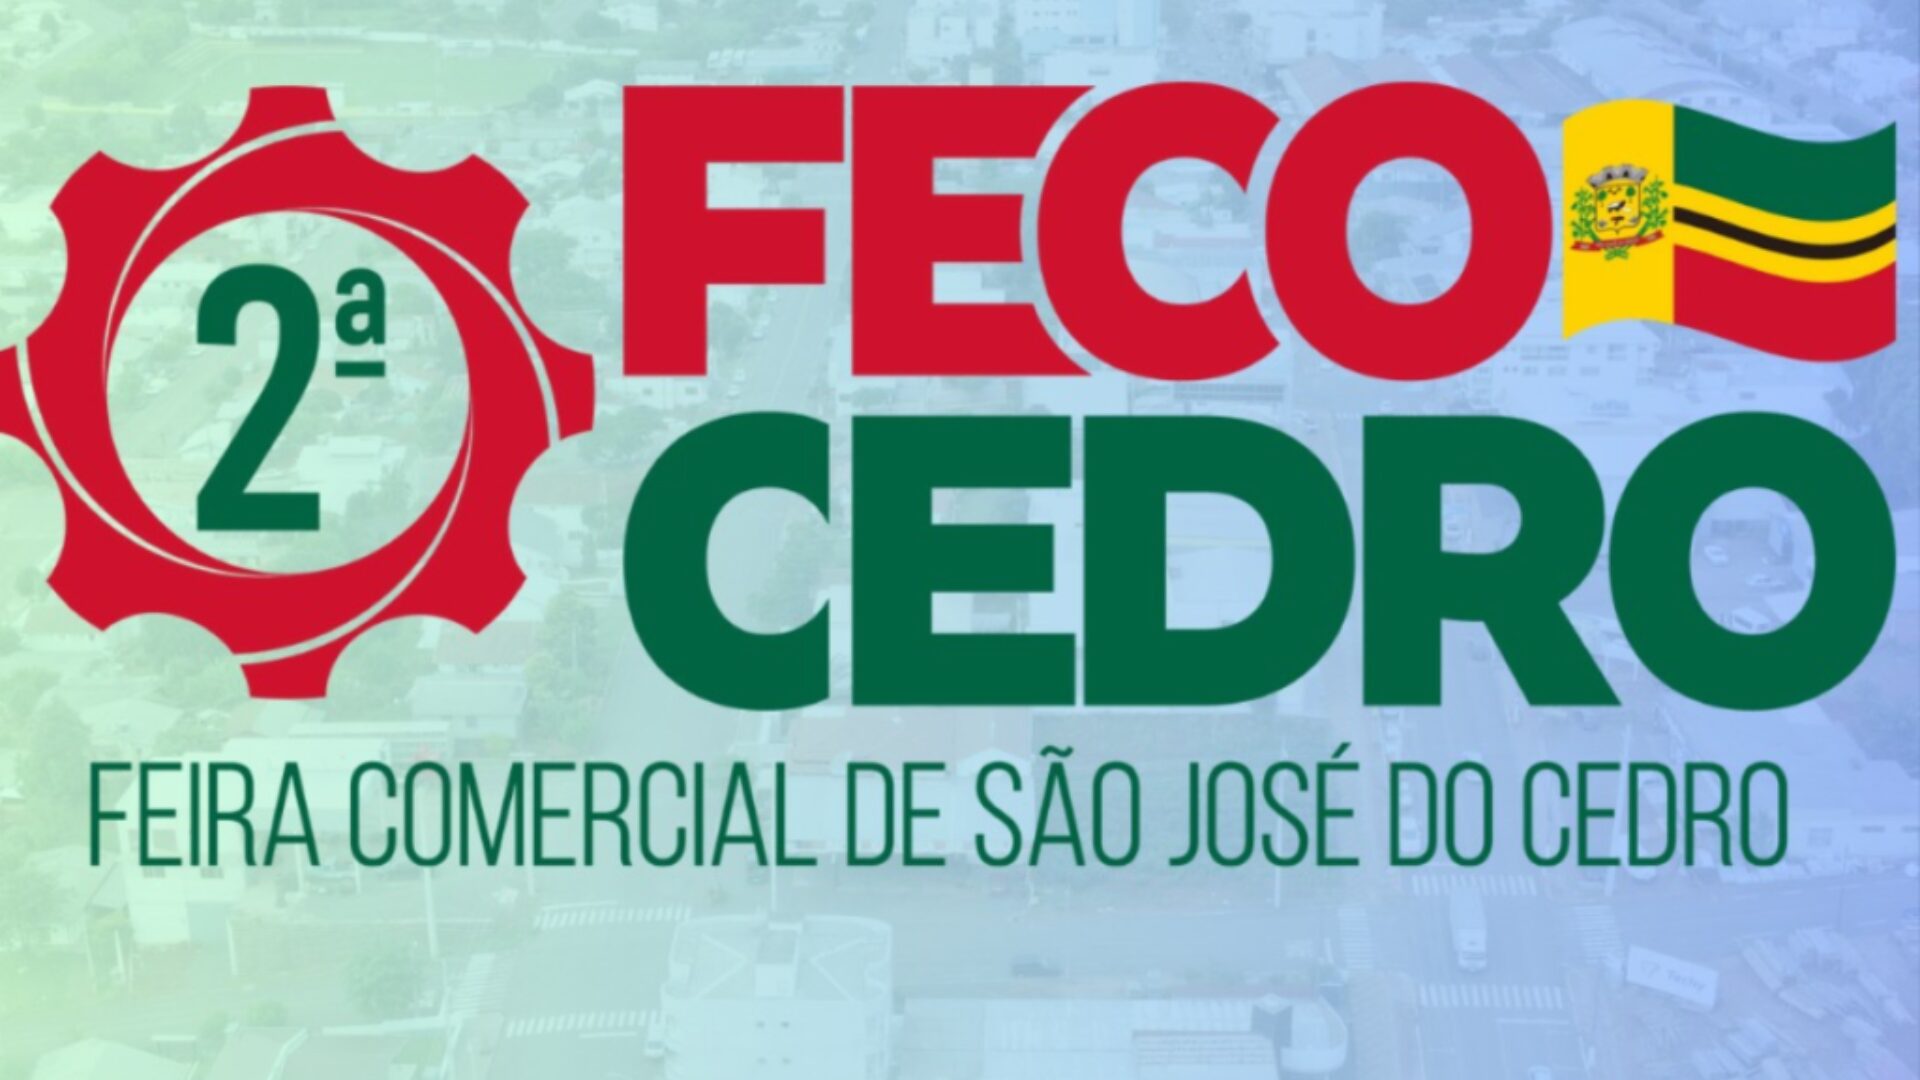 FecoCedro